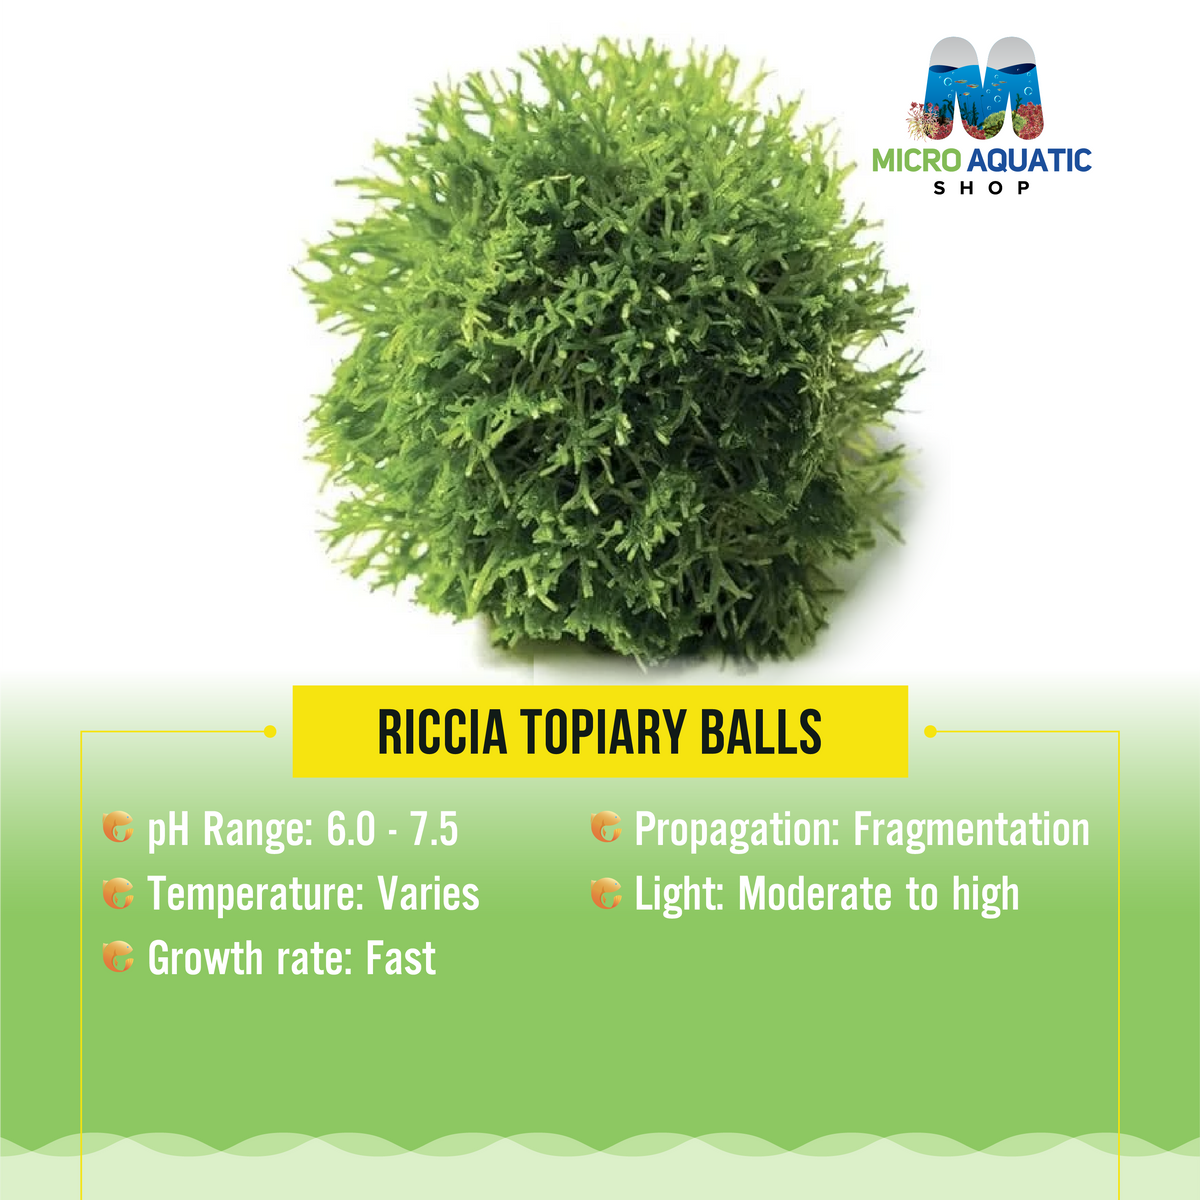 RICCIA TOPIARY BALLS